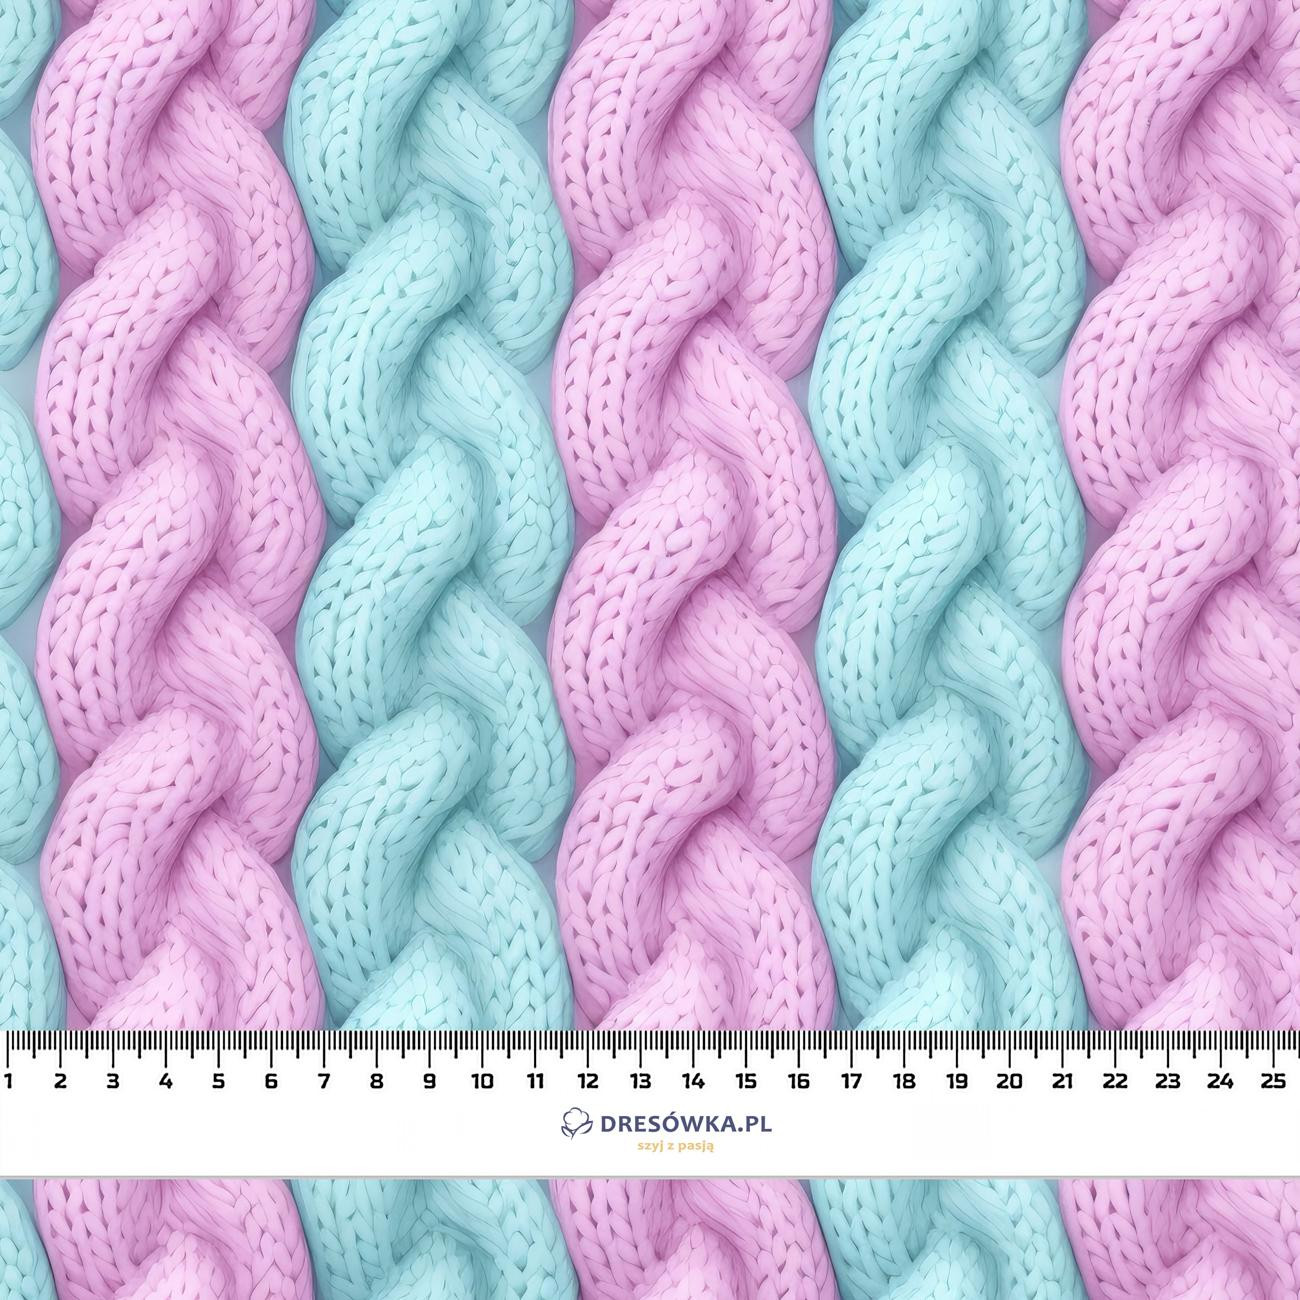 IMITATION PASTEL SWEATER PAT. 4 - Hydrophobic brushed knit